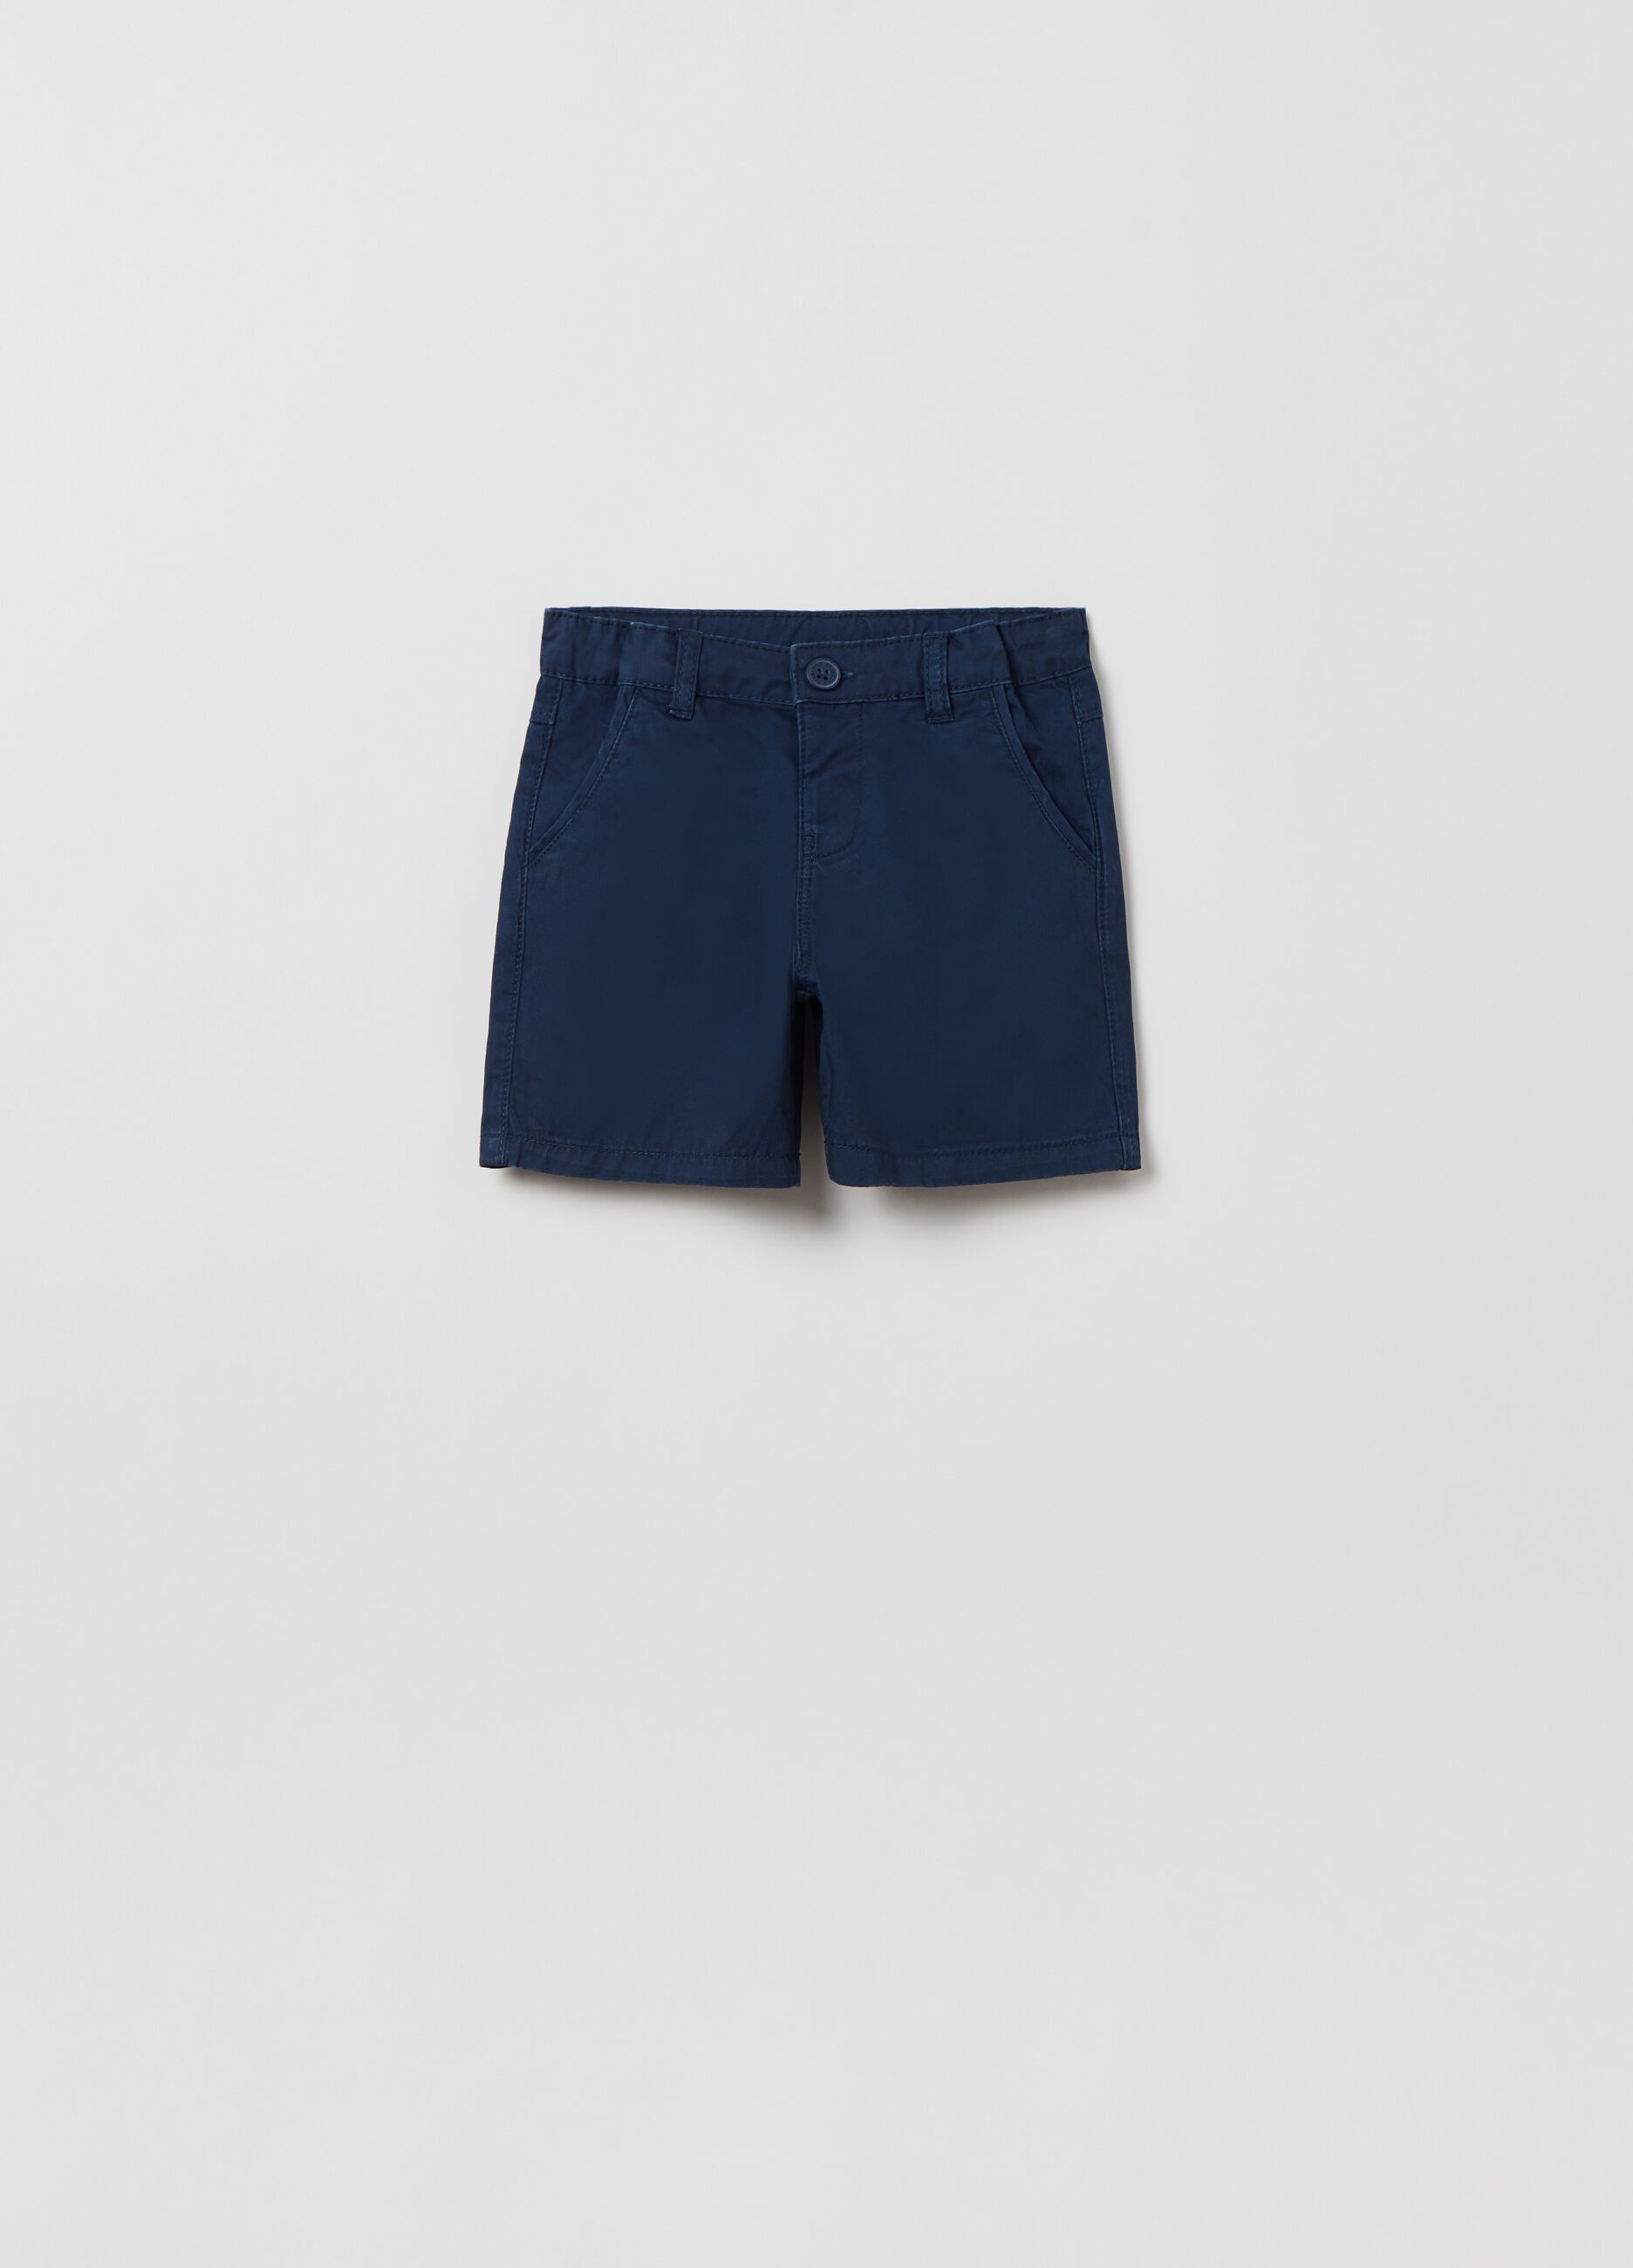 Cotton Bermuda shorts with pockets